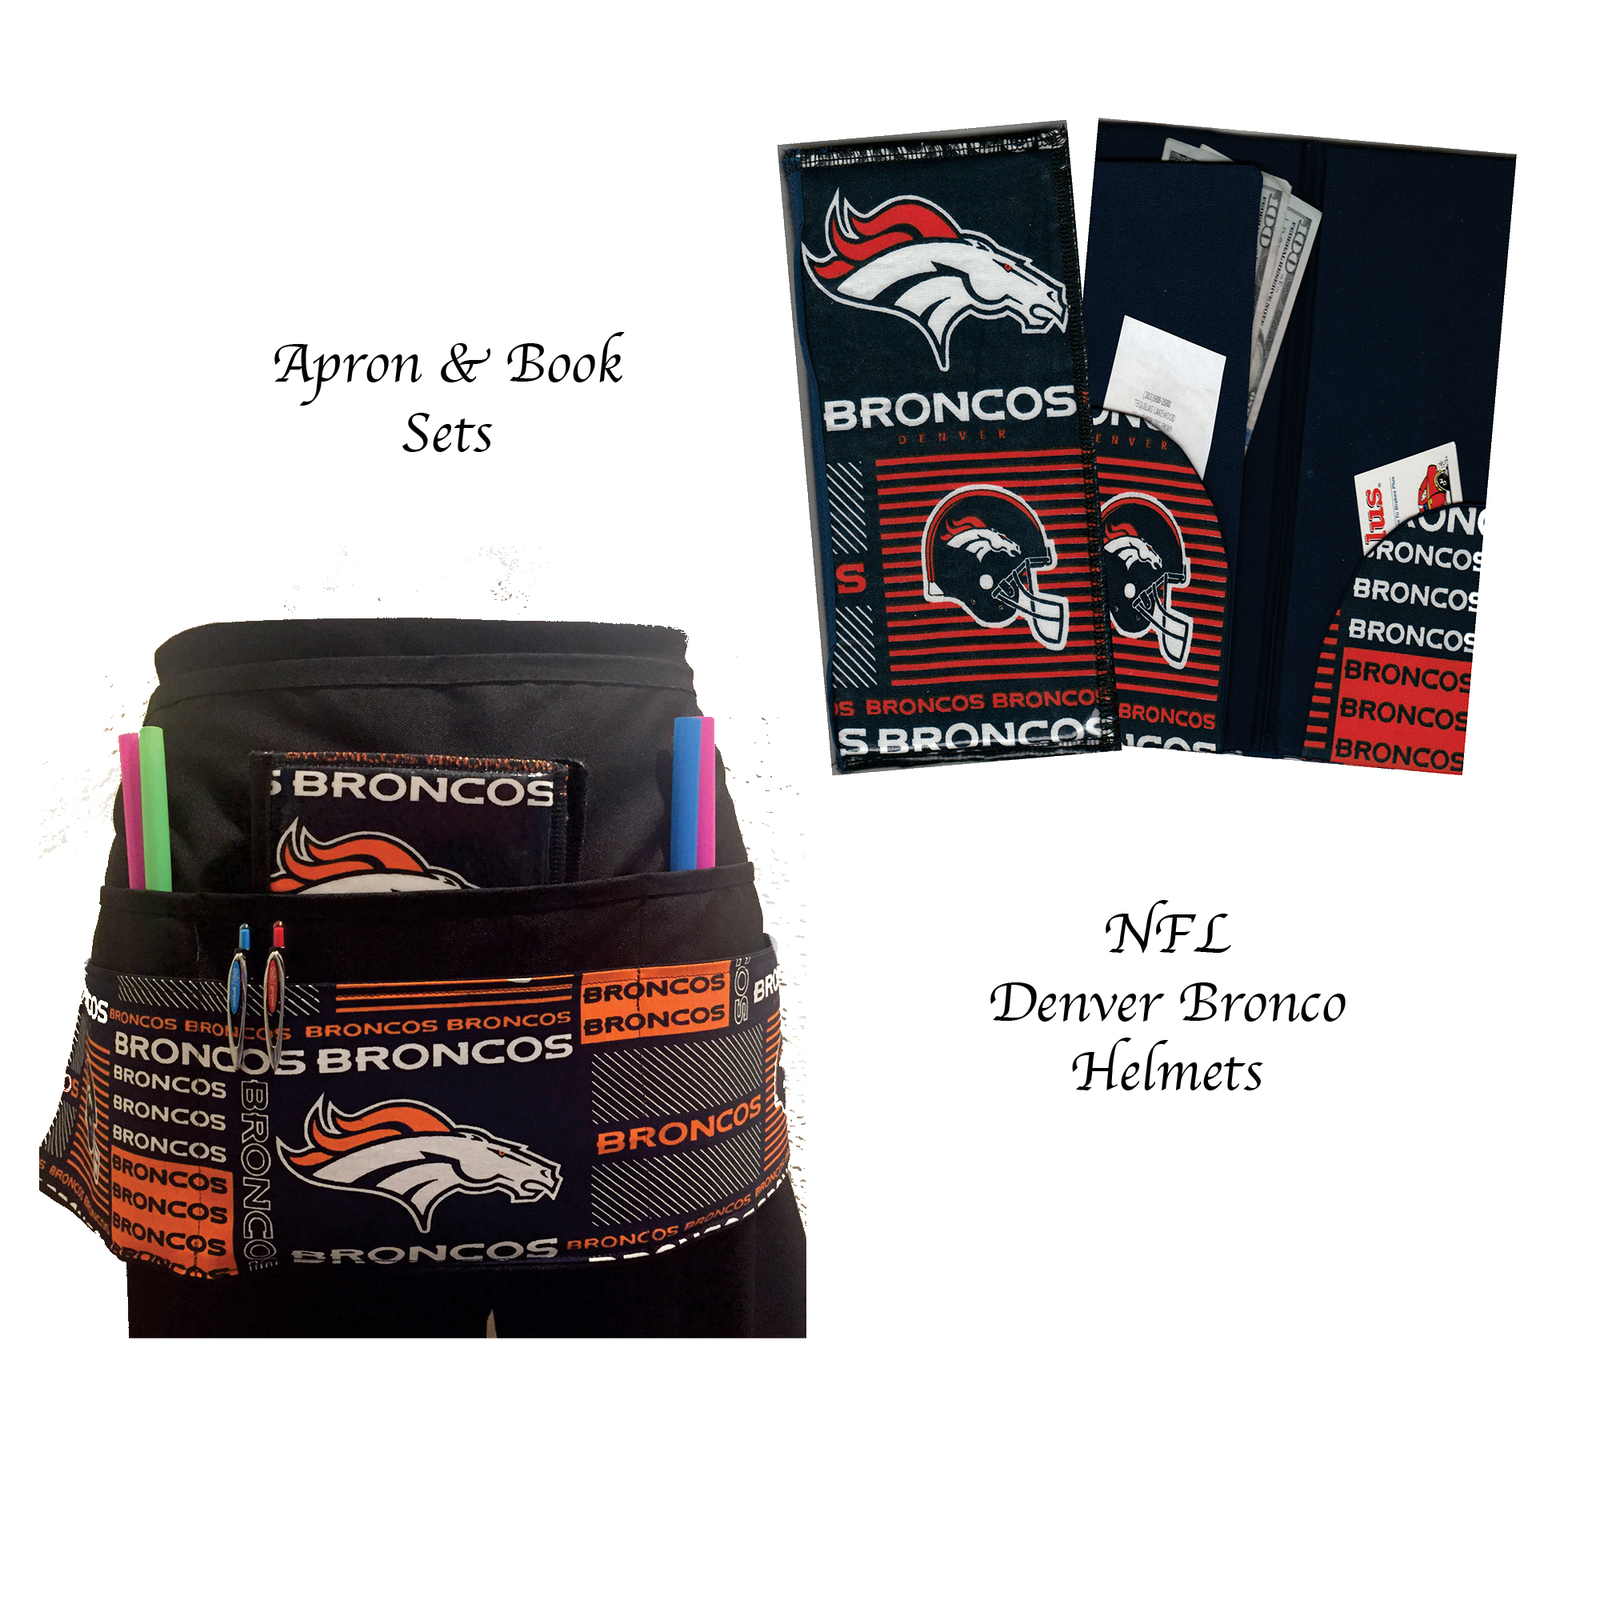 Primary image for NFL Denver Broncos Helmet Server Book and Apron Set 